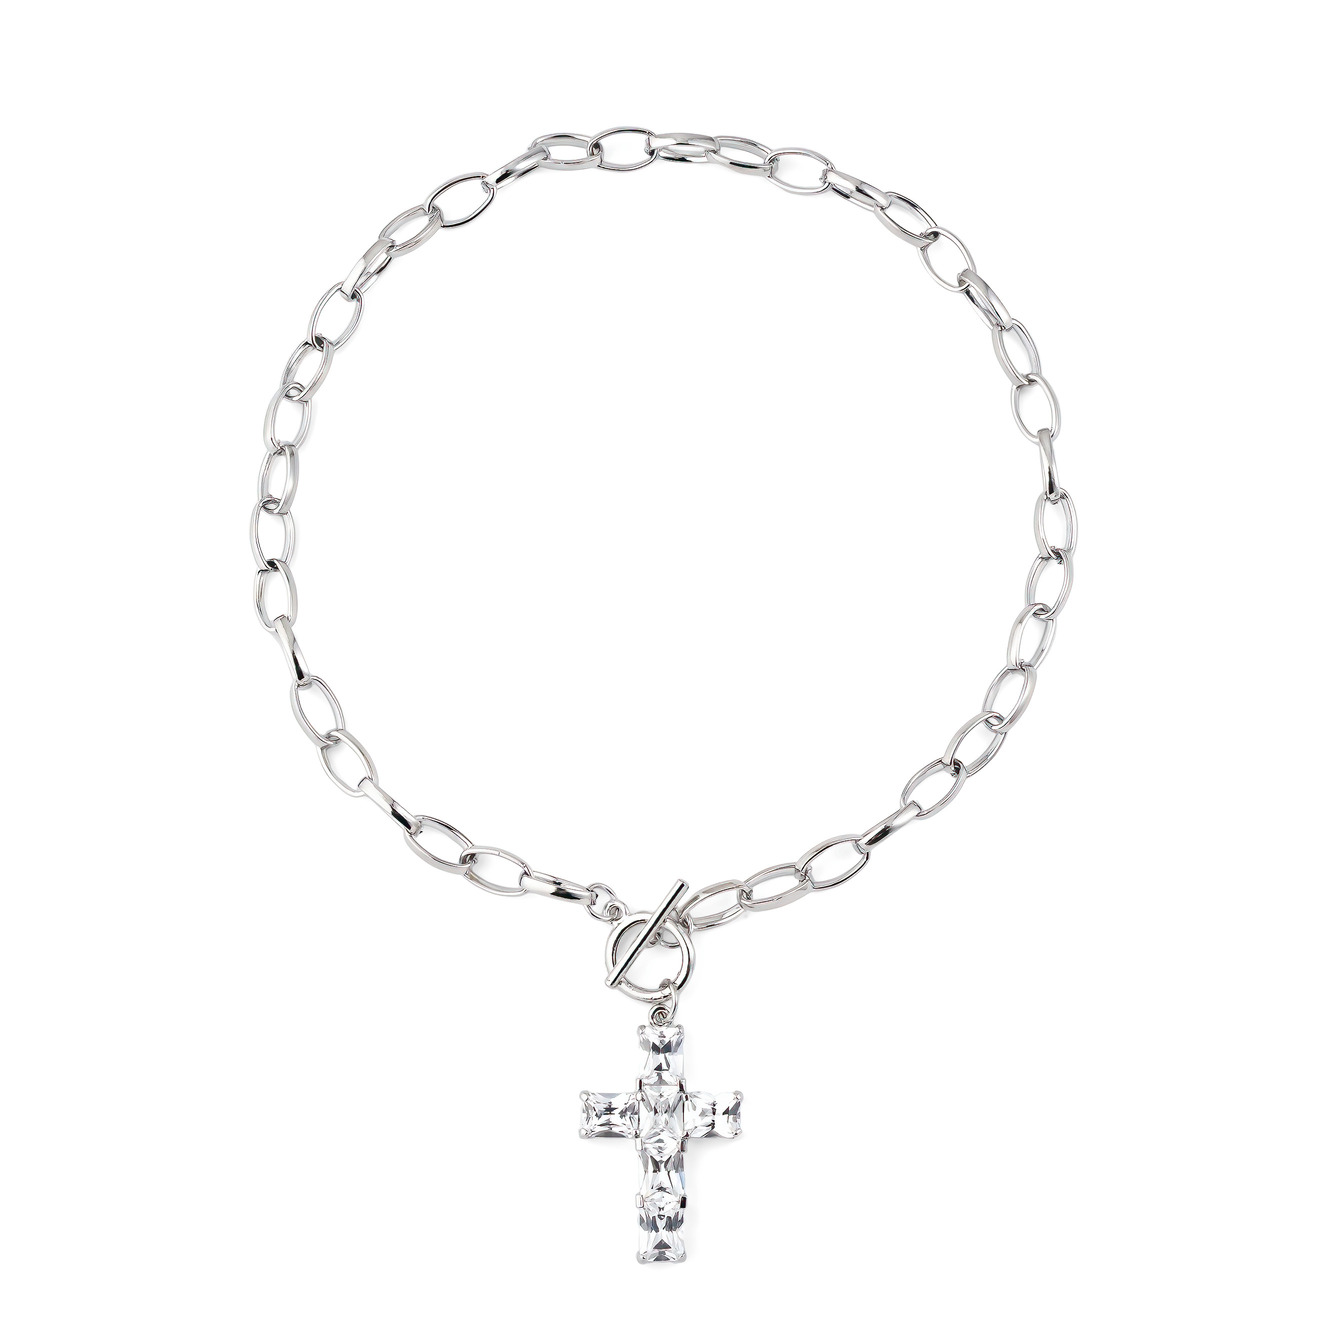 Herald Percy Серебристое колье-цепь с подвеской крестом из кристаллов lisa smith серебристое колье цепь с подвеской наконечником